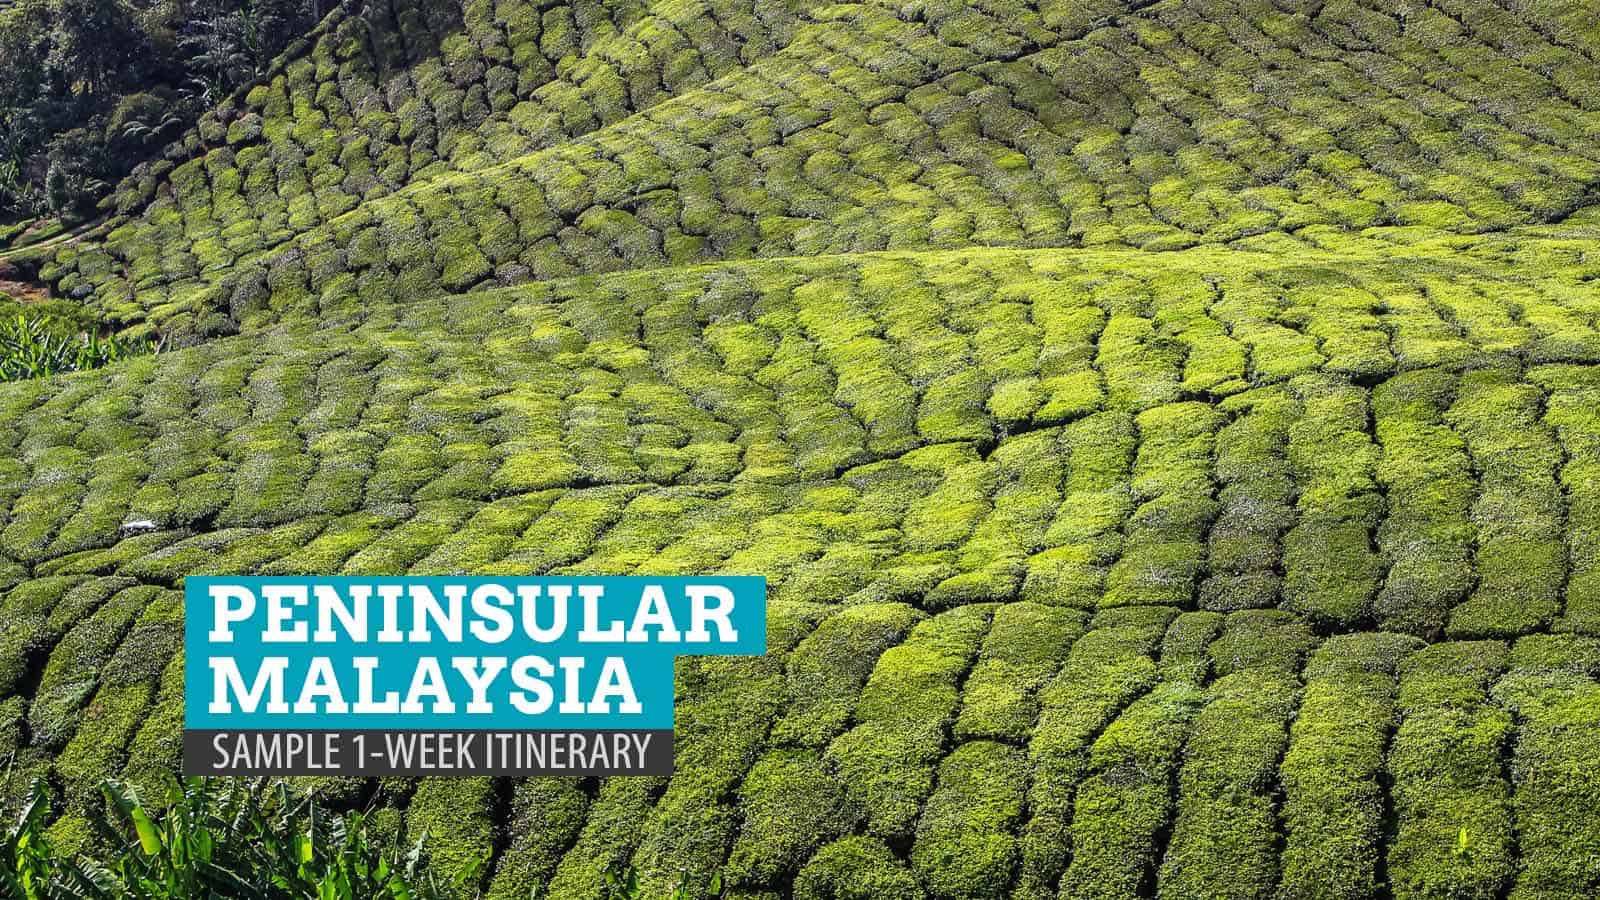 Peninsular Malaysia: Sample 1-Week Itinerary